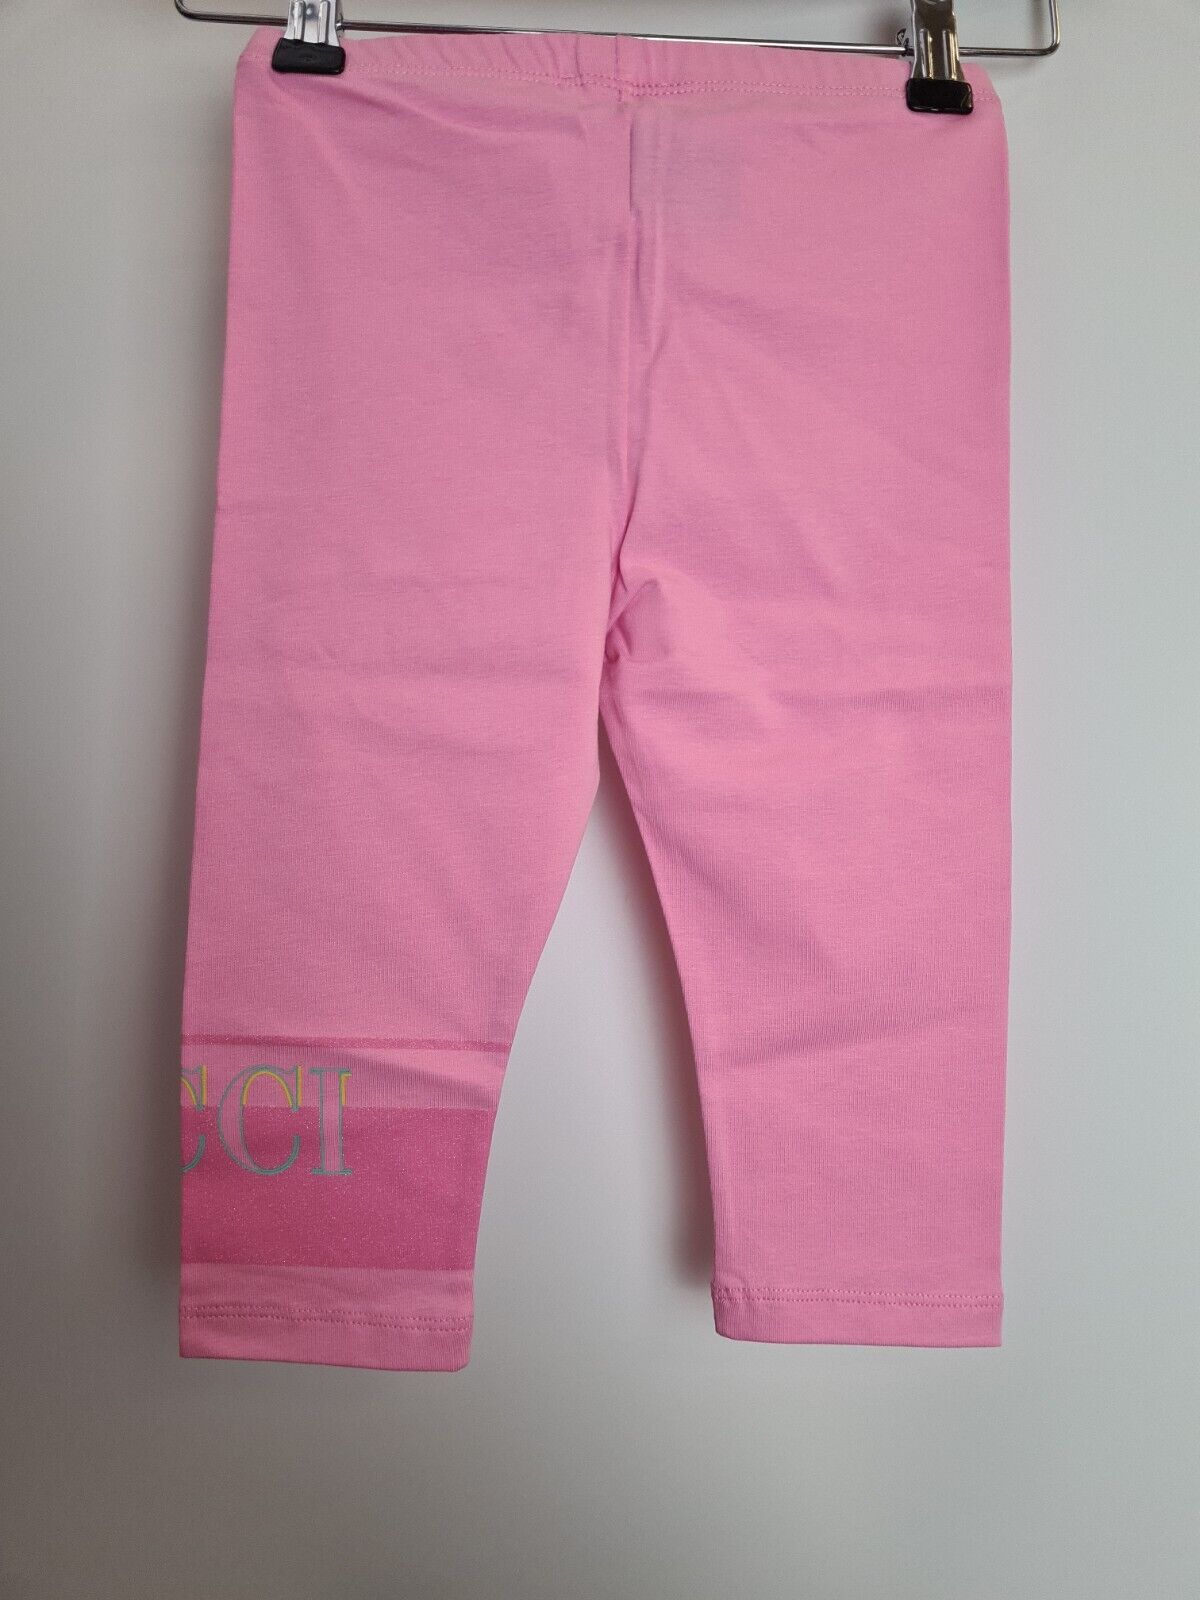 Emilio Pucci Baby Girls Pink Glitter Motif Leggings Size 18 Months **** V261